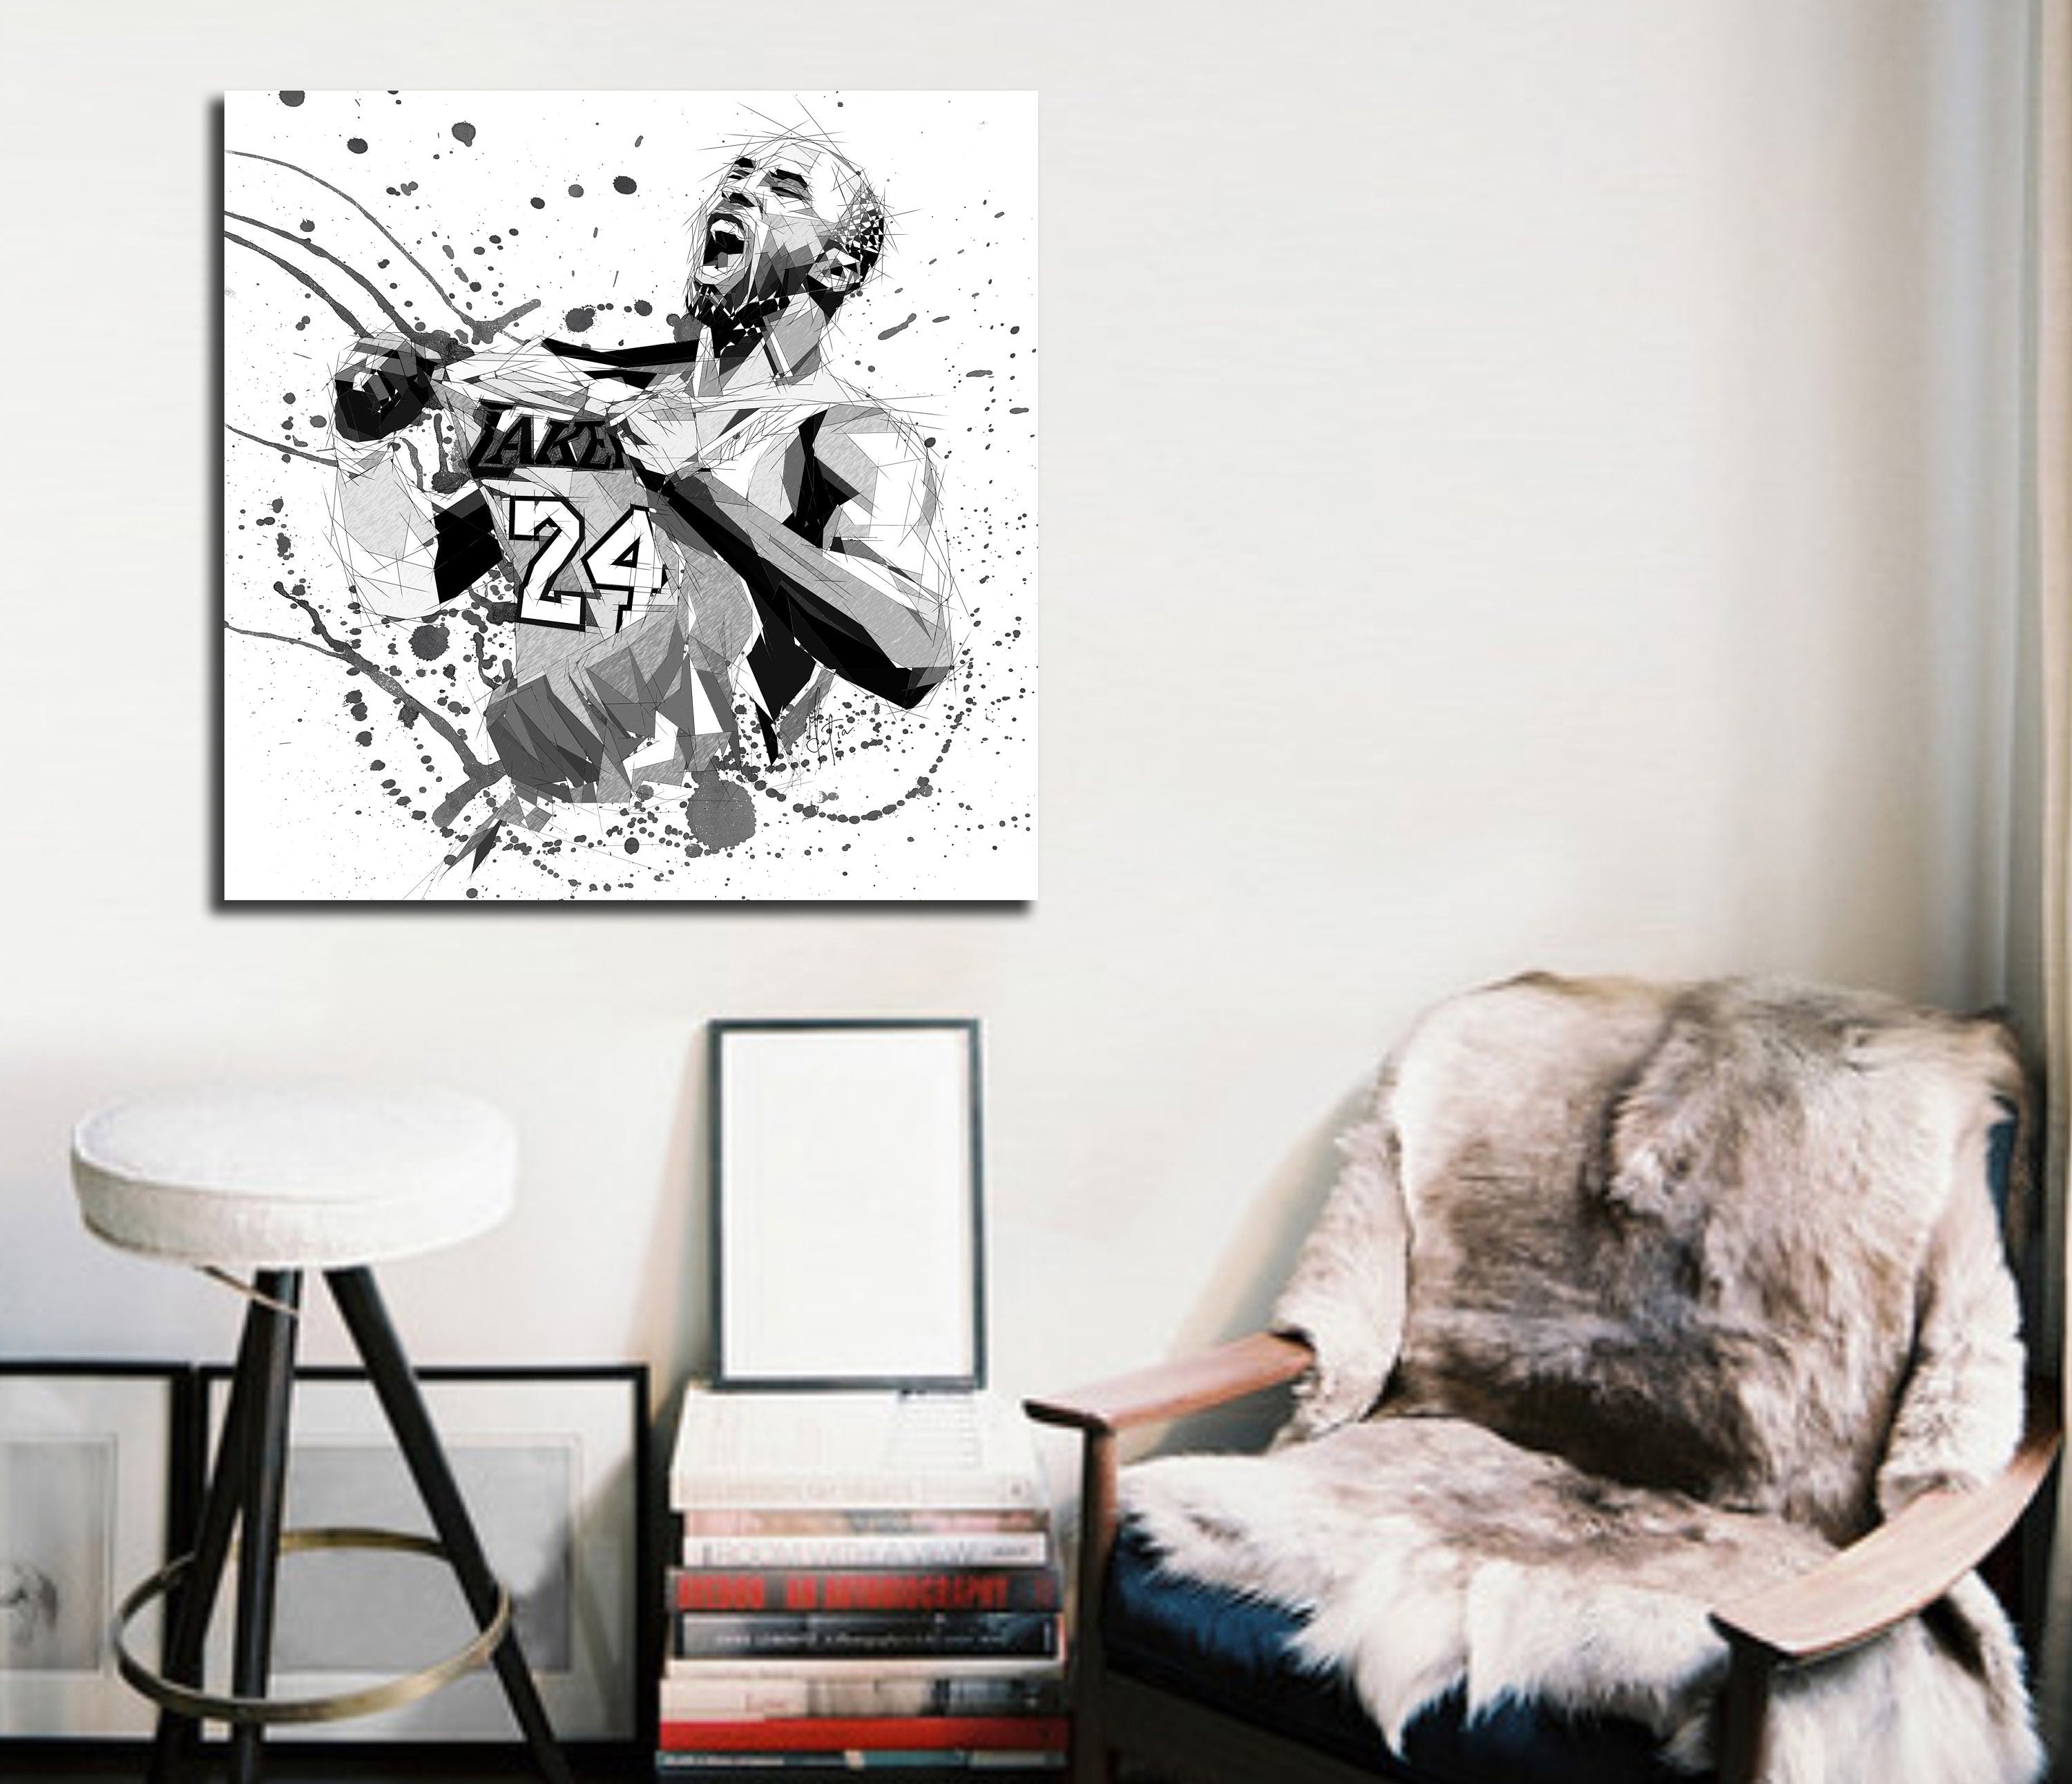 Wall Art Print kobe bryant basketball, Gifts & Merchandise